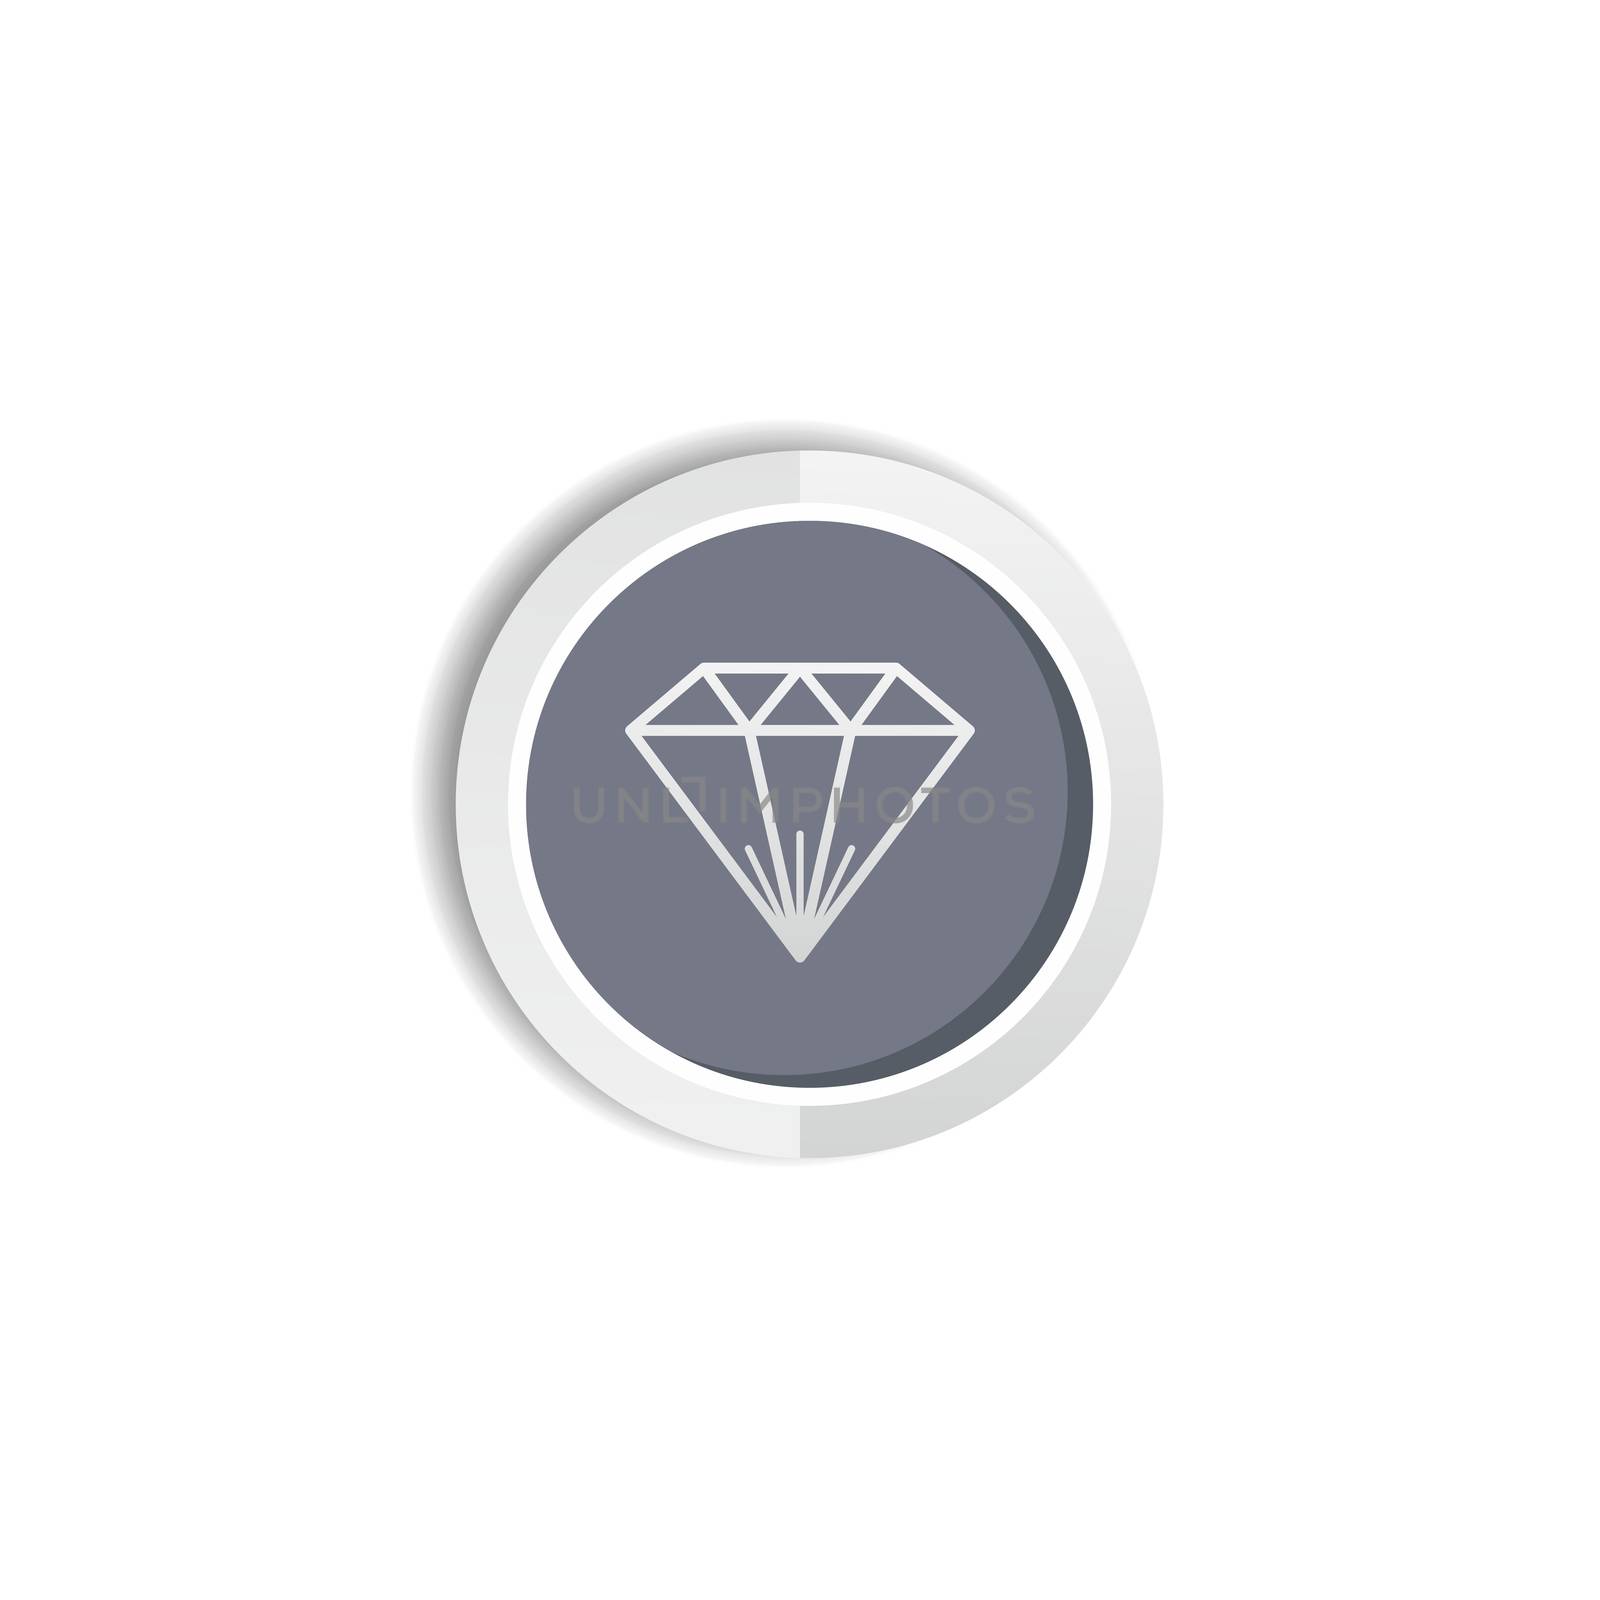 diamond jewelry gemstone theme vector art illustration